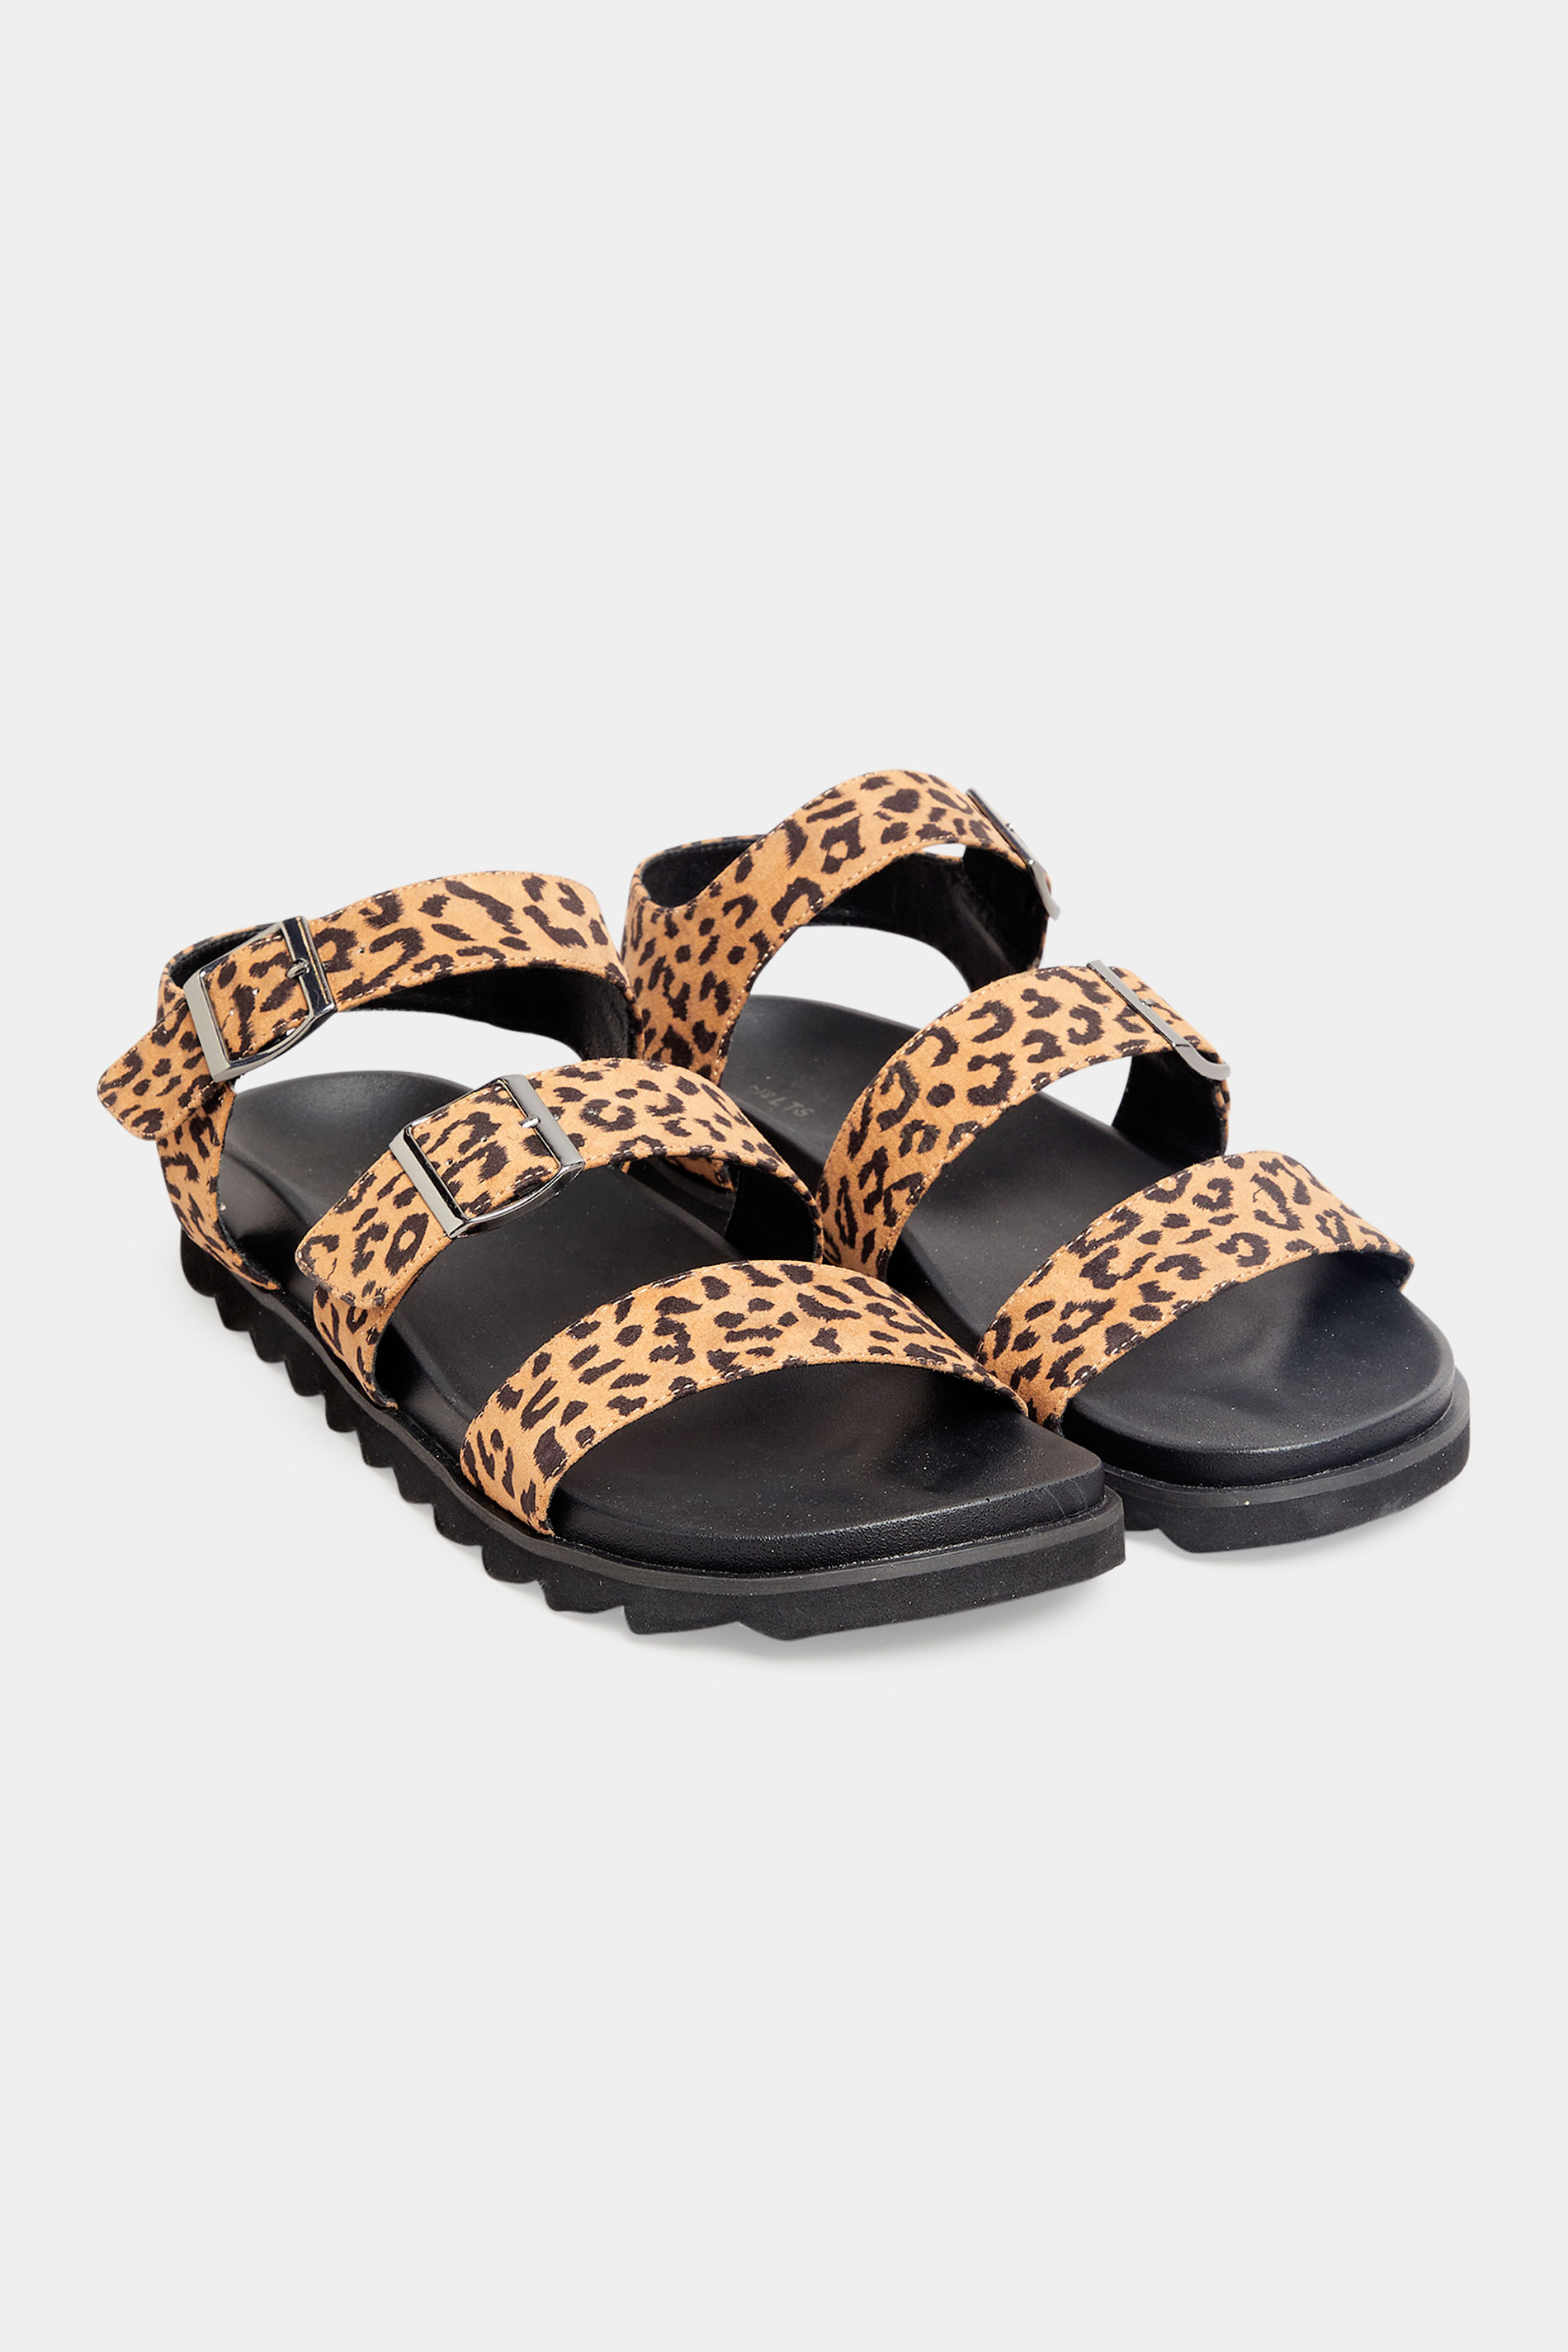 Grande taille  Sandals Grande taille  Flat Sandals | LTS Brown Leopard Print Buckle Strap Sandals In Standard D Fit - IK35161